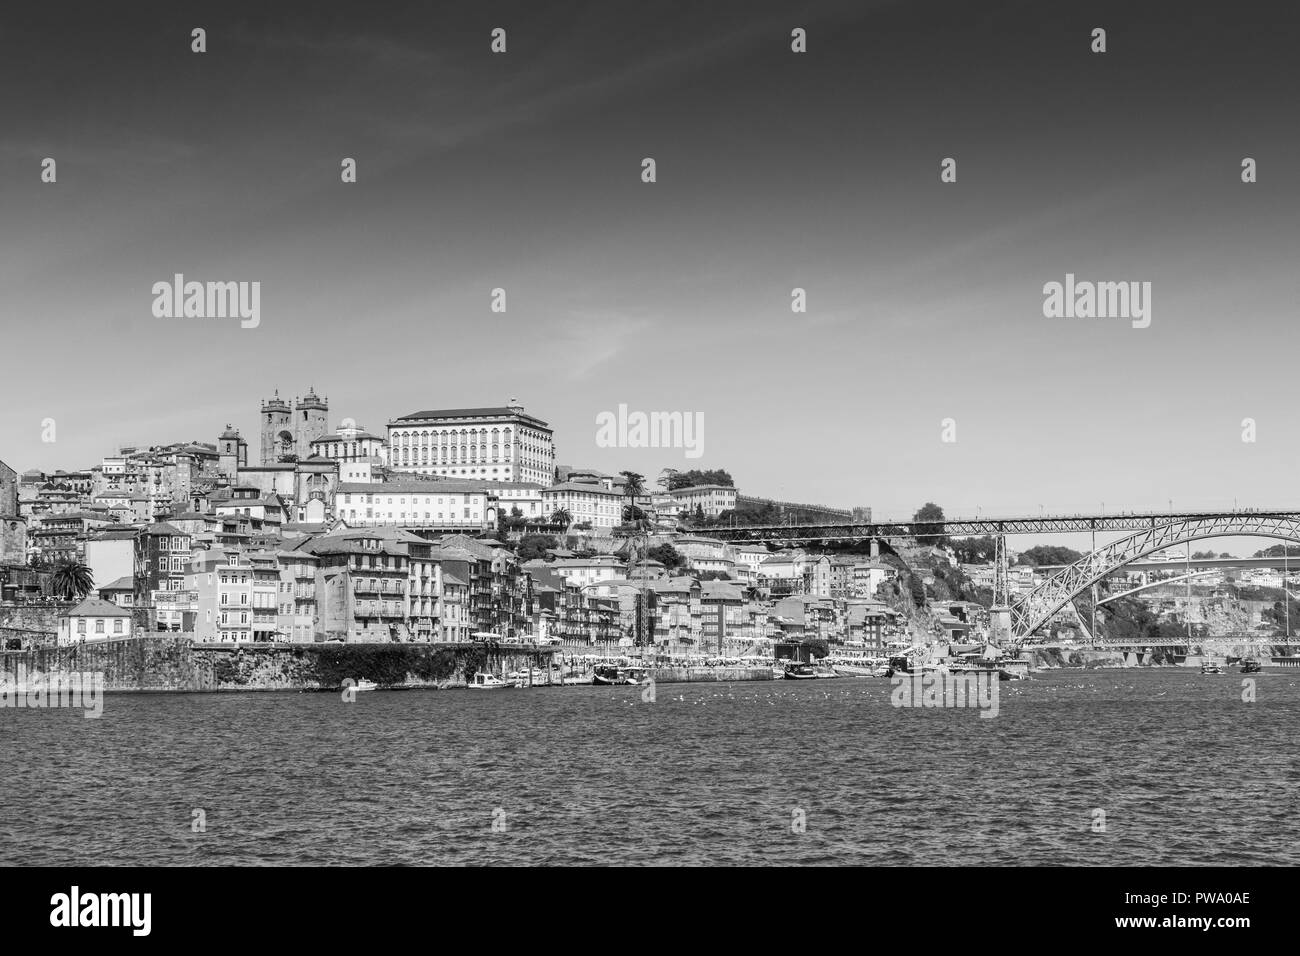 Oporto City View, Portugal - Black and White Stock Photo